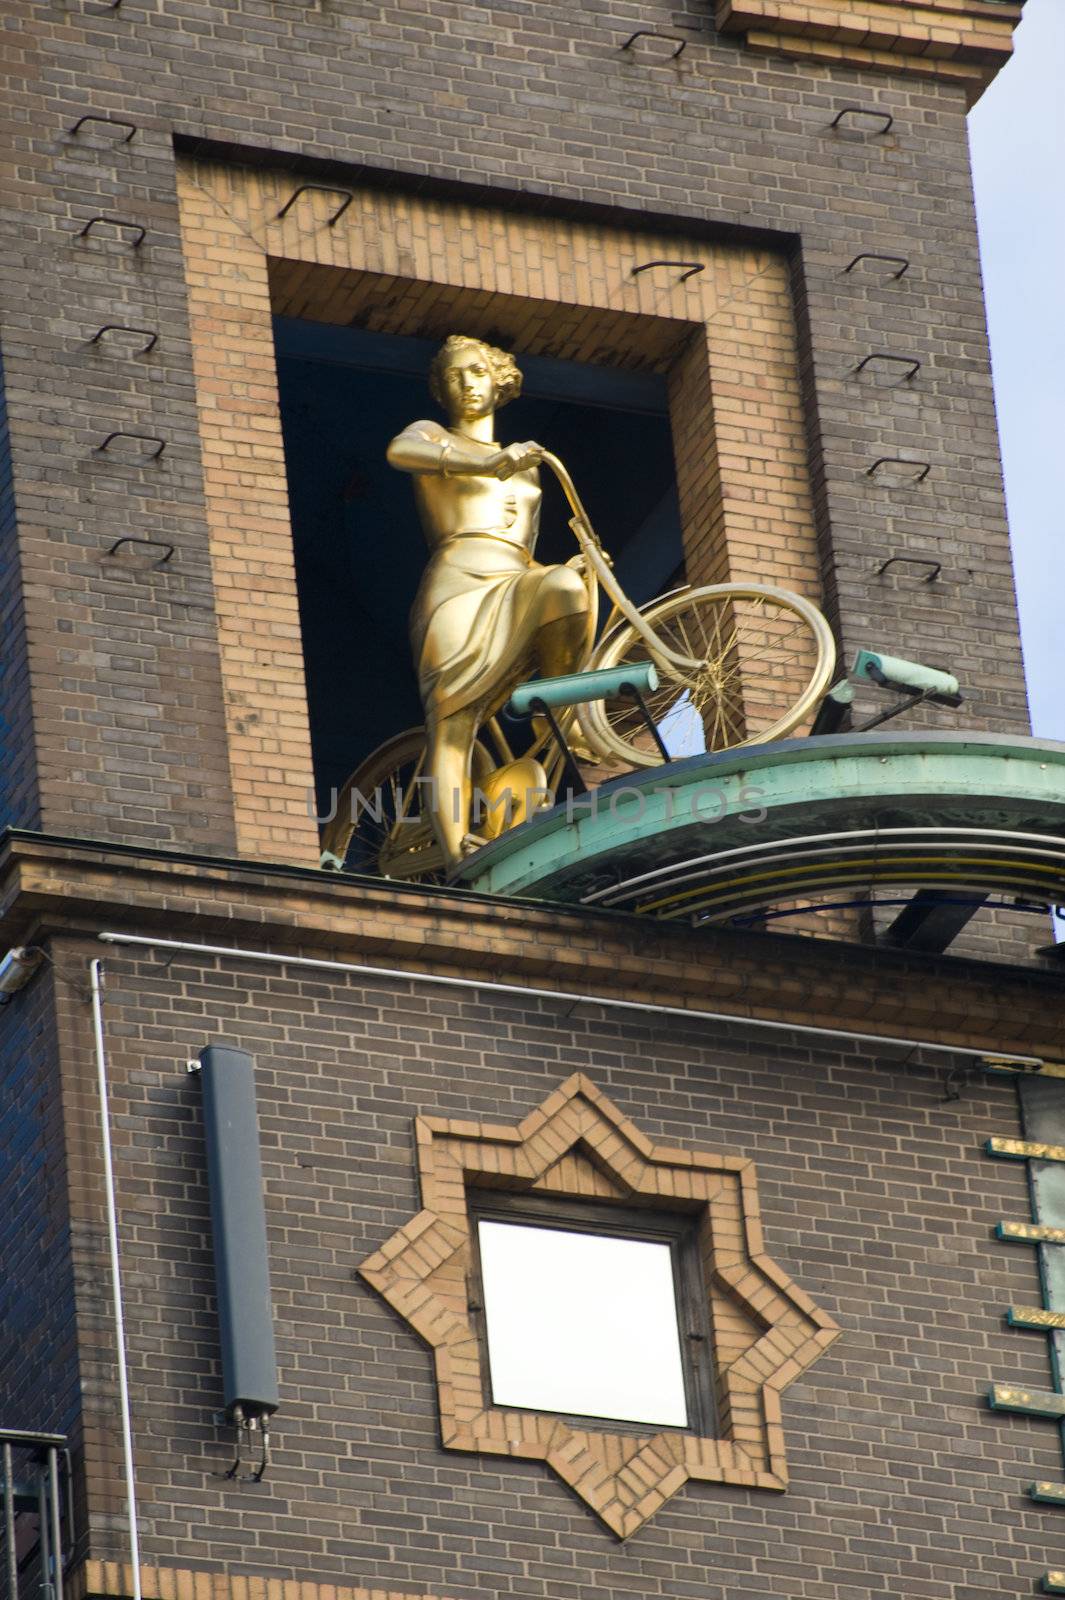 Sculpture of women the cyclist on a building facade in Copenhagen, Denmark. Taken on June 2012.